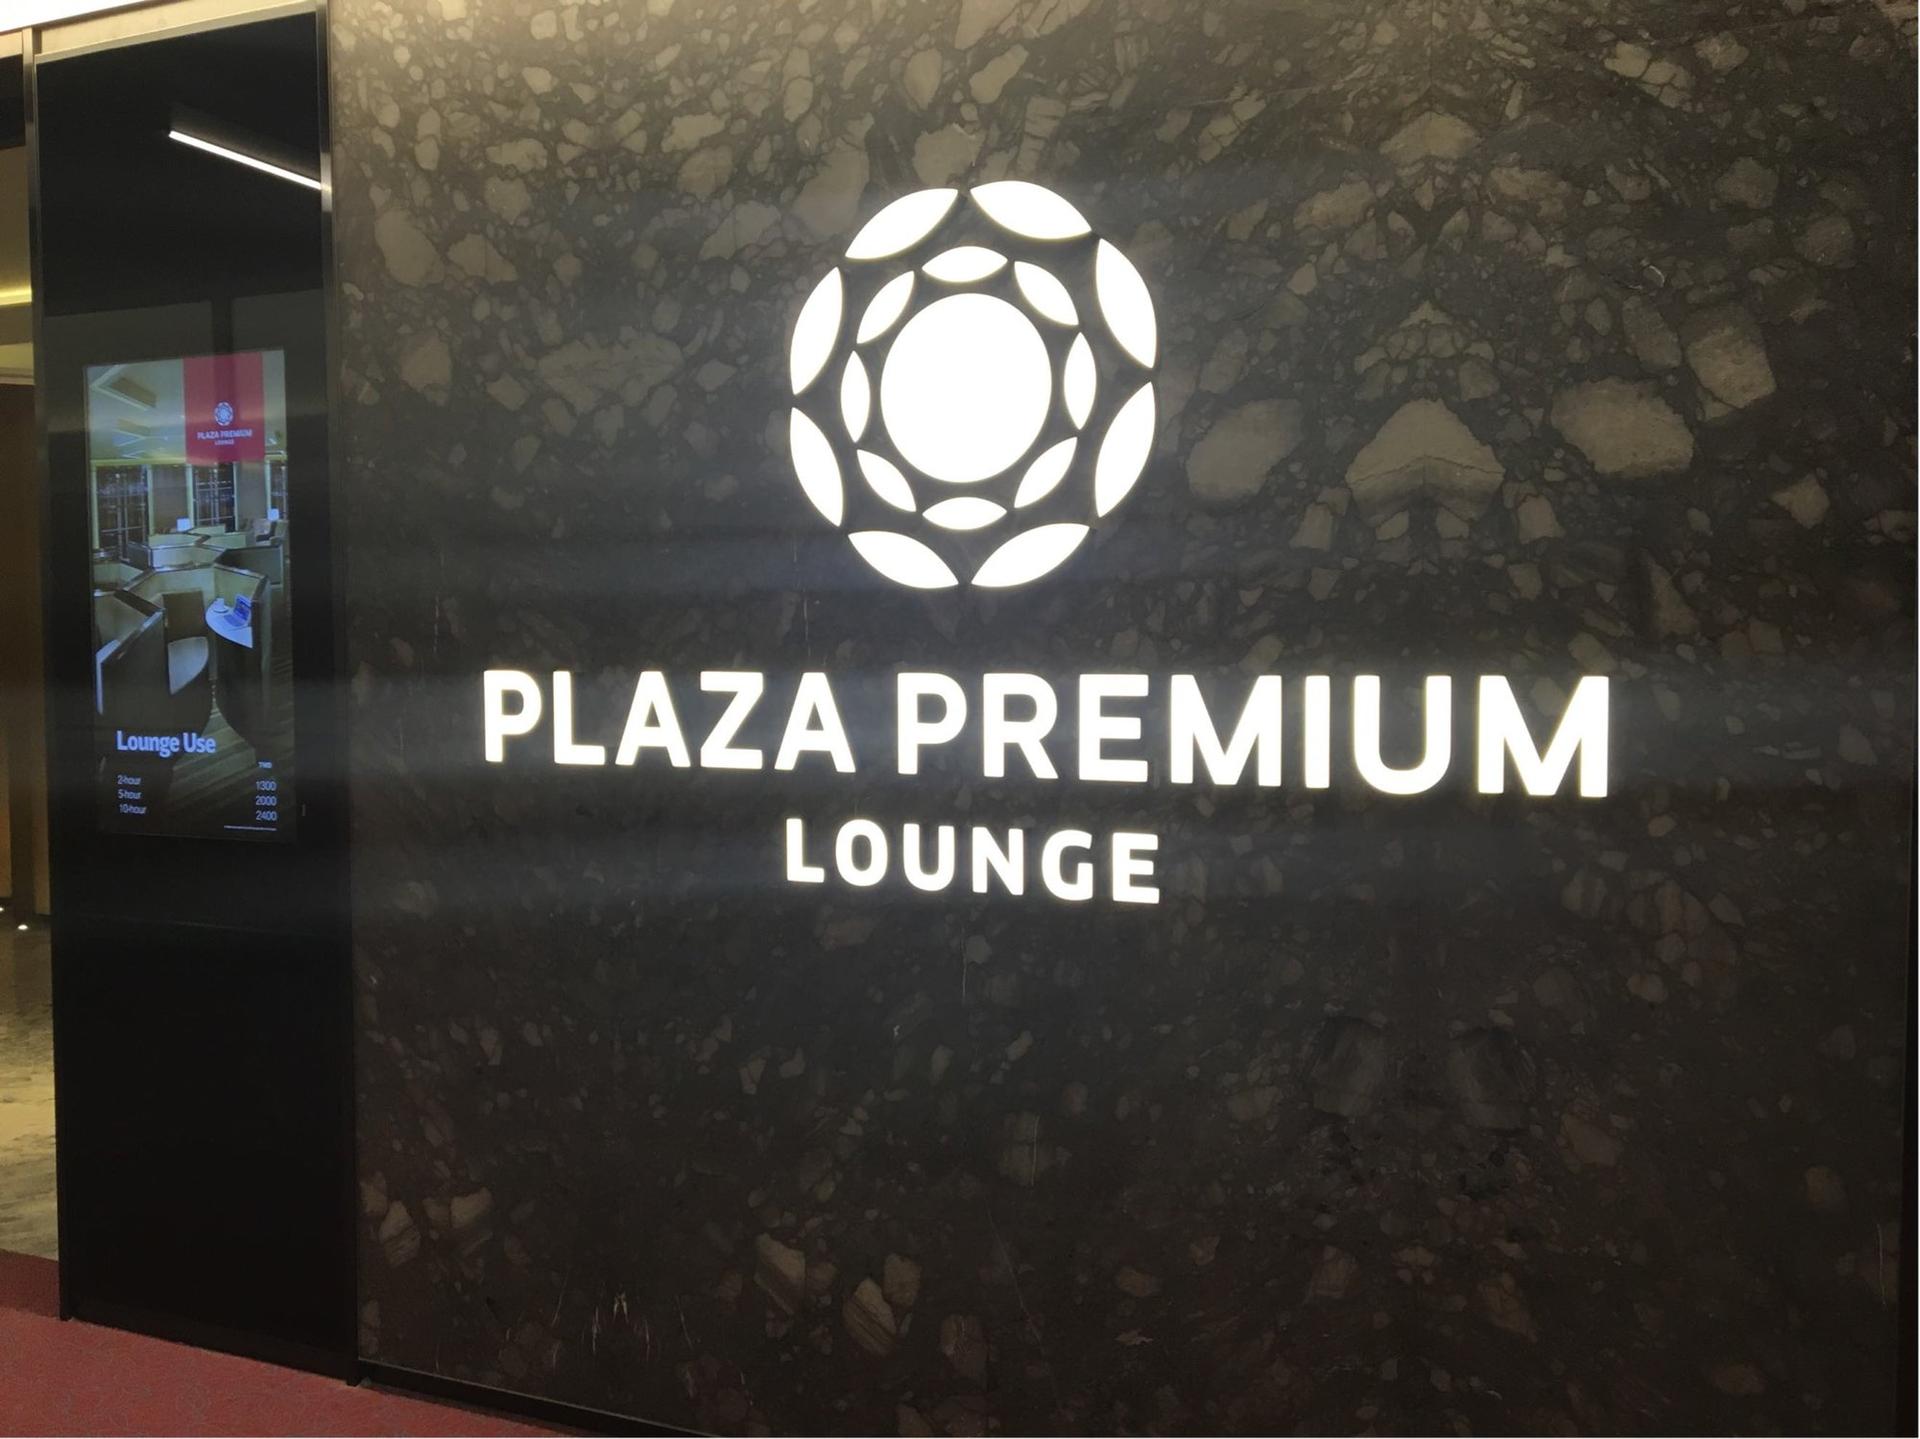 Plaza Premium Lounge (Zone C) image 15 of 36